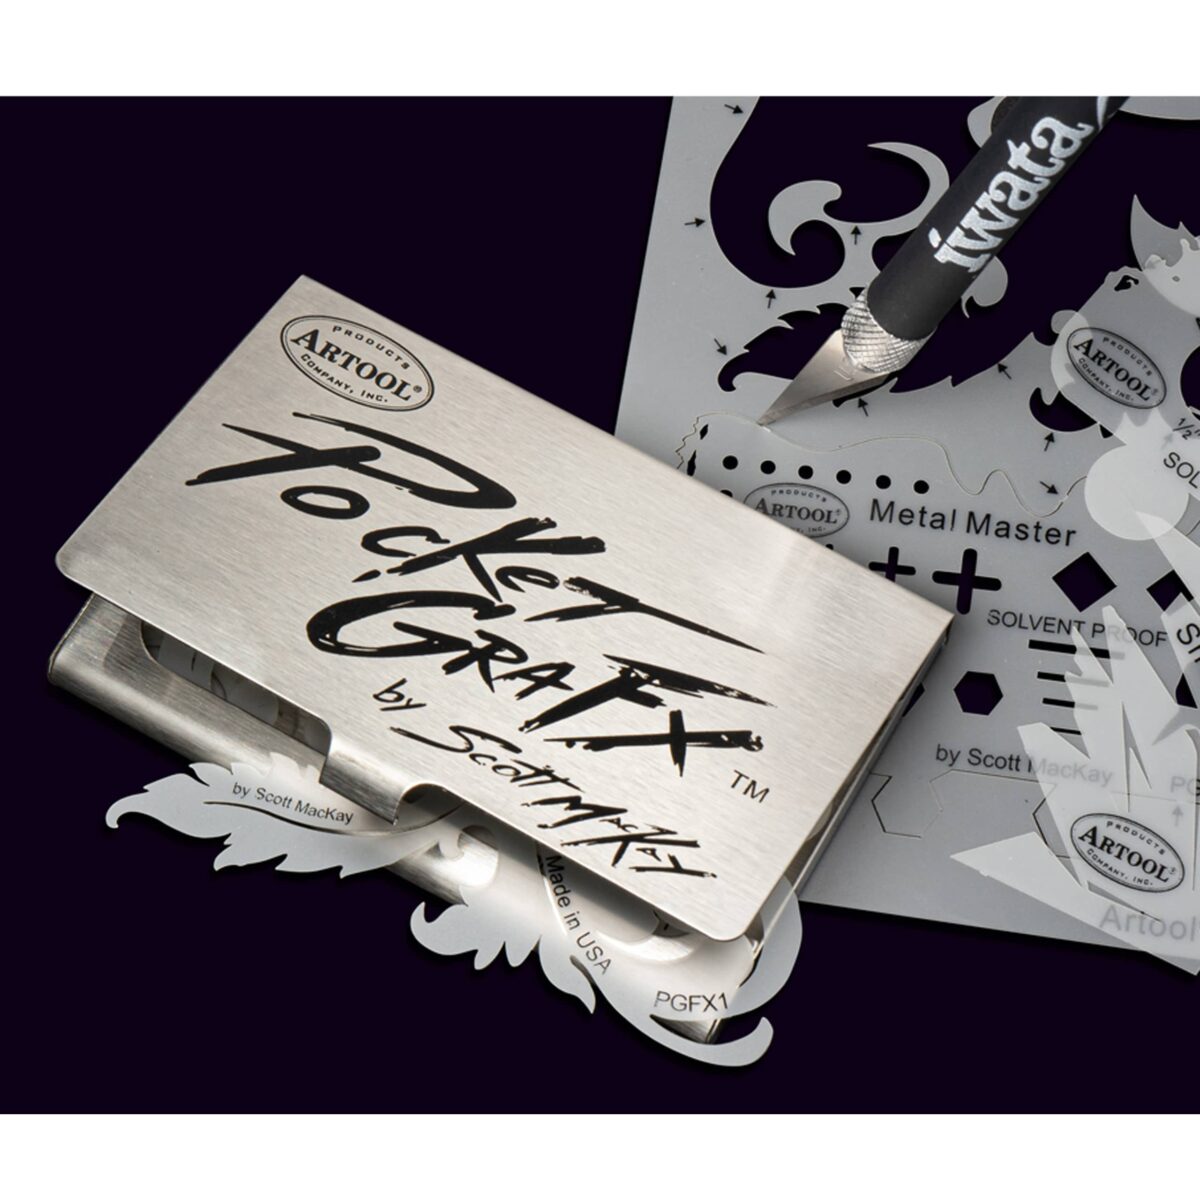 Artool PocketGraFX Freehand Airbrush Template Set by Scott MacKay - ΣΕΤ 6 ΣΤΕΝΣΙΛ ΣΕ ΑΝΟΞΕΙΔΩΤΟ ΚΟΥΤΙ απο τον Scott MacKay